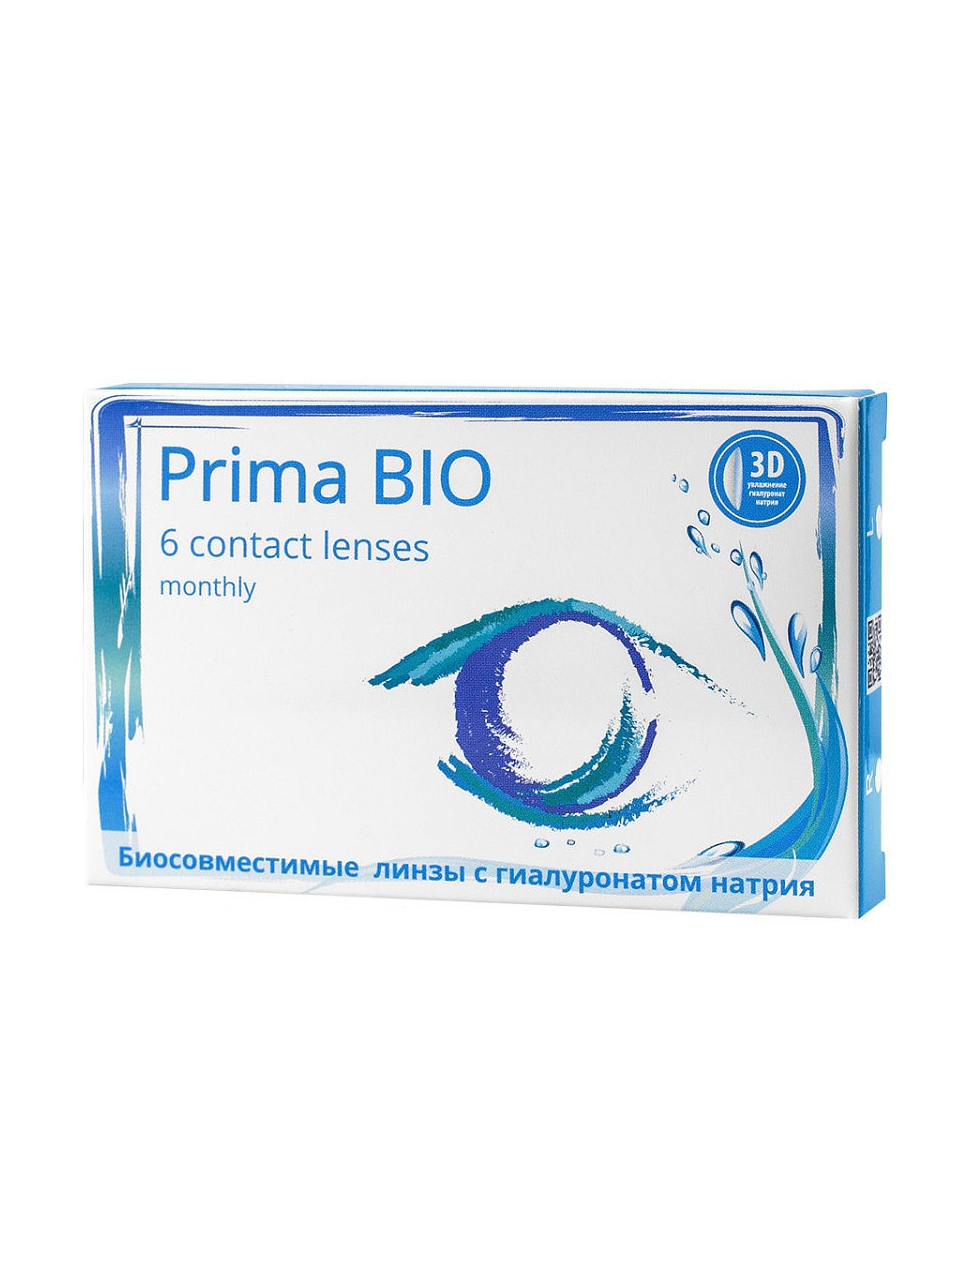 Линзы прима. OKVISION prima Bio (6 линз). Прима био контактные линзы bi Focal. Линзы Прима био бифокальные -6. Линзы OKVISION® prima Bio bi-Focal Design.